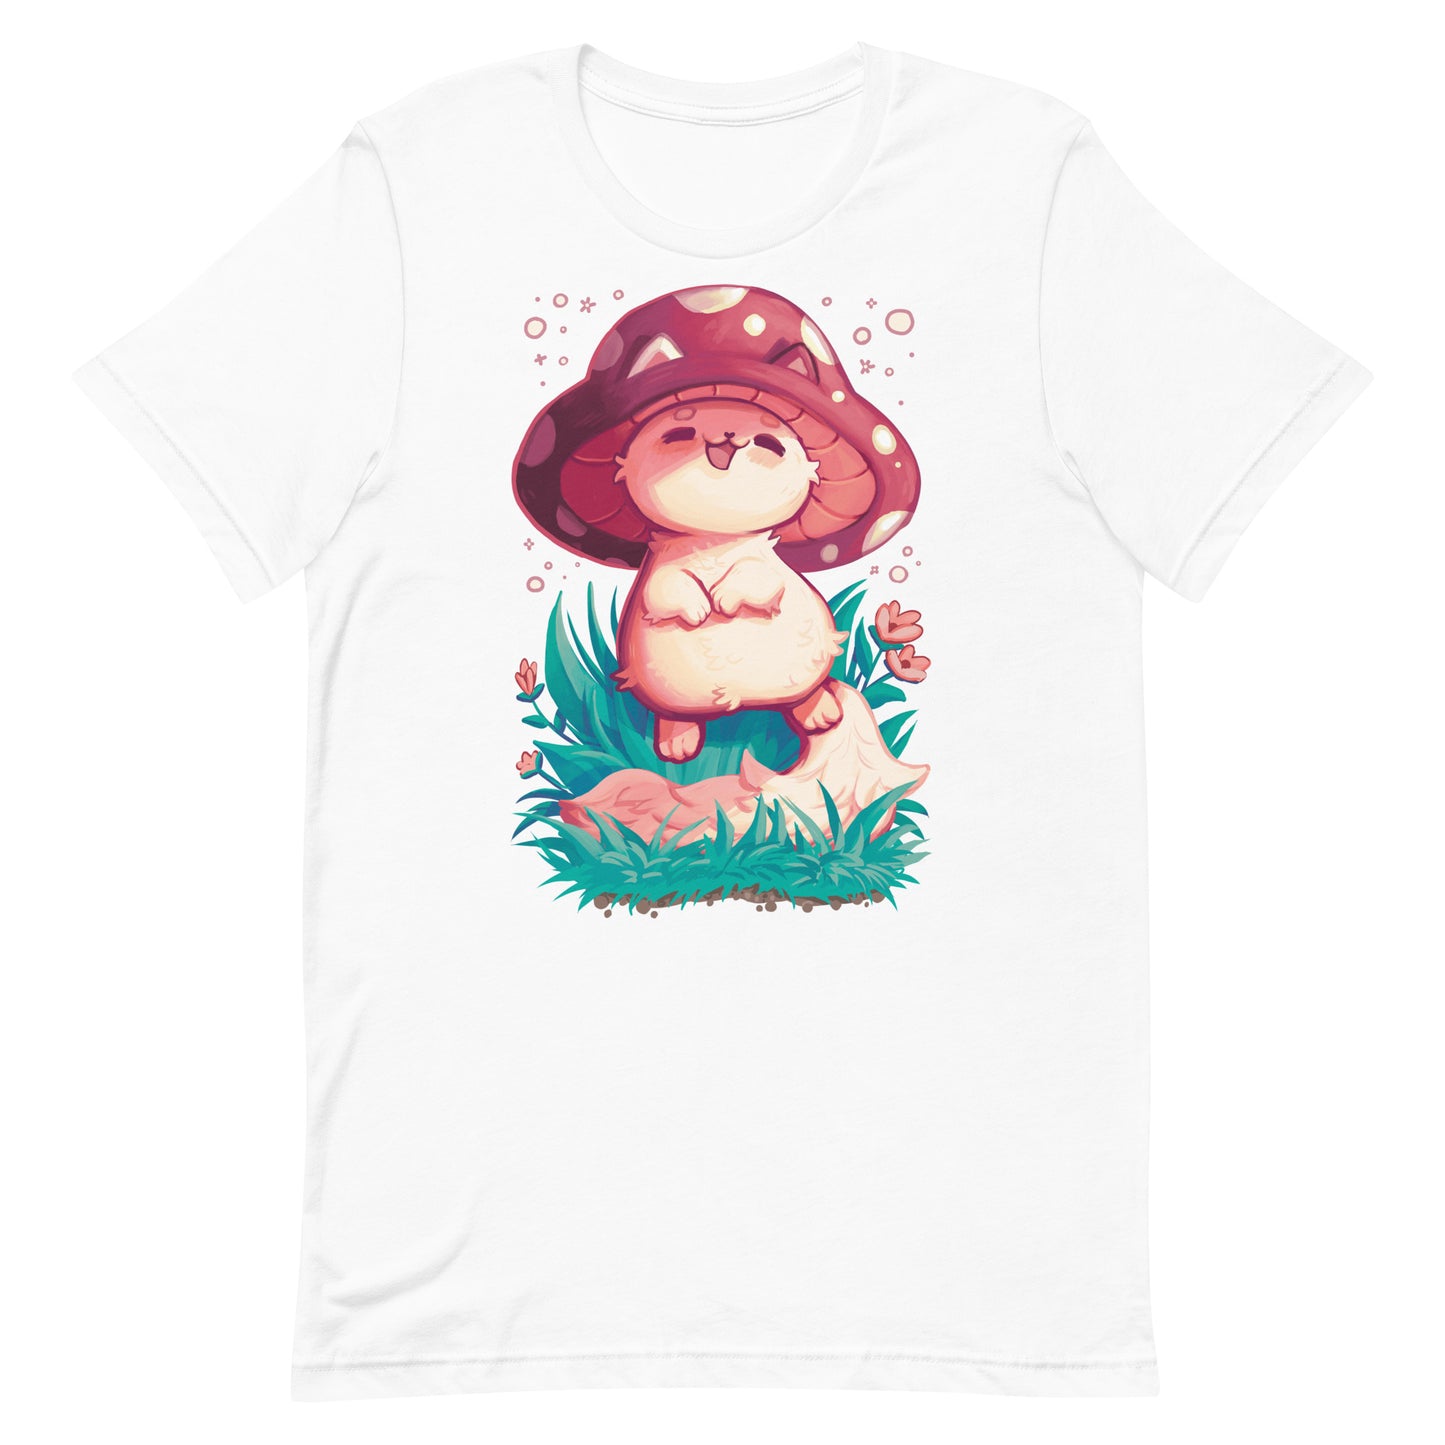 Meowshroom Unisex T-Shirt by The Shirt Hoard